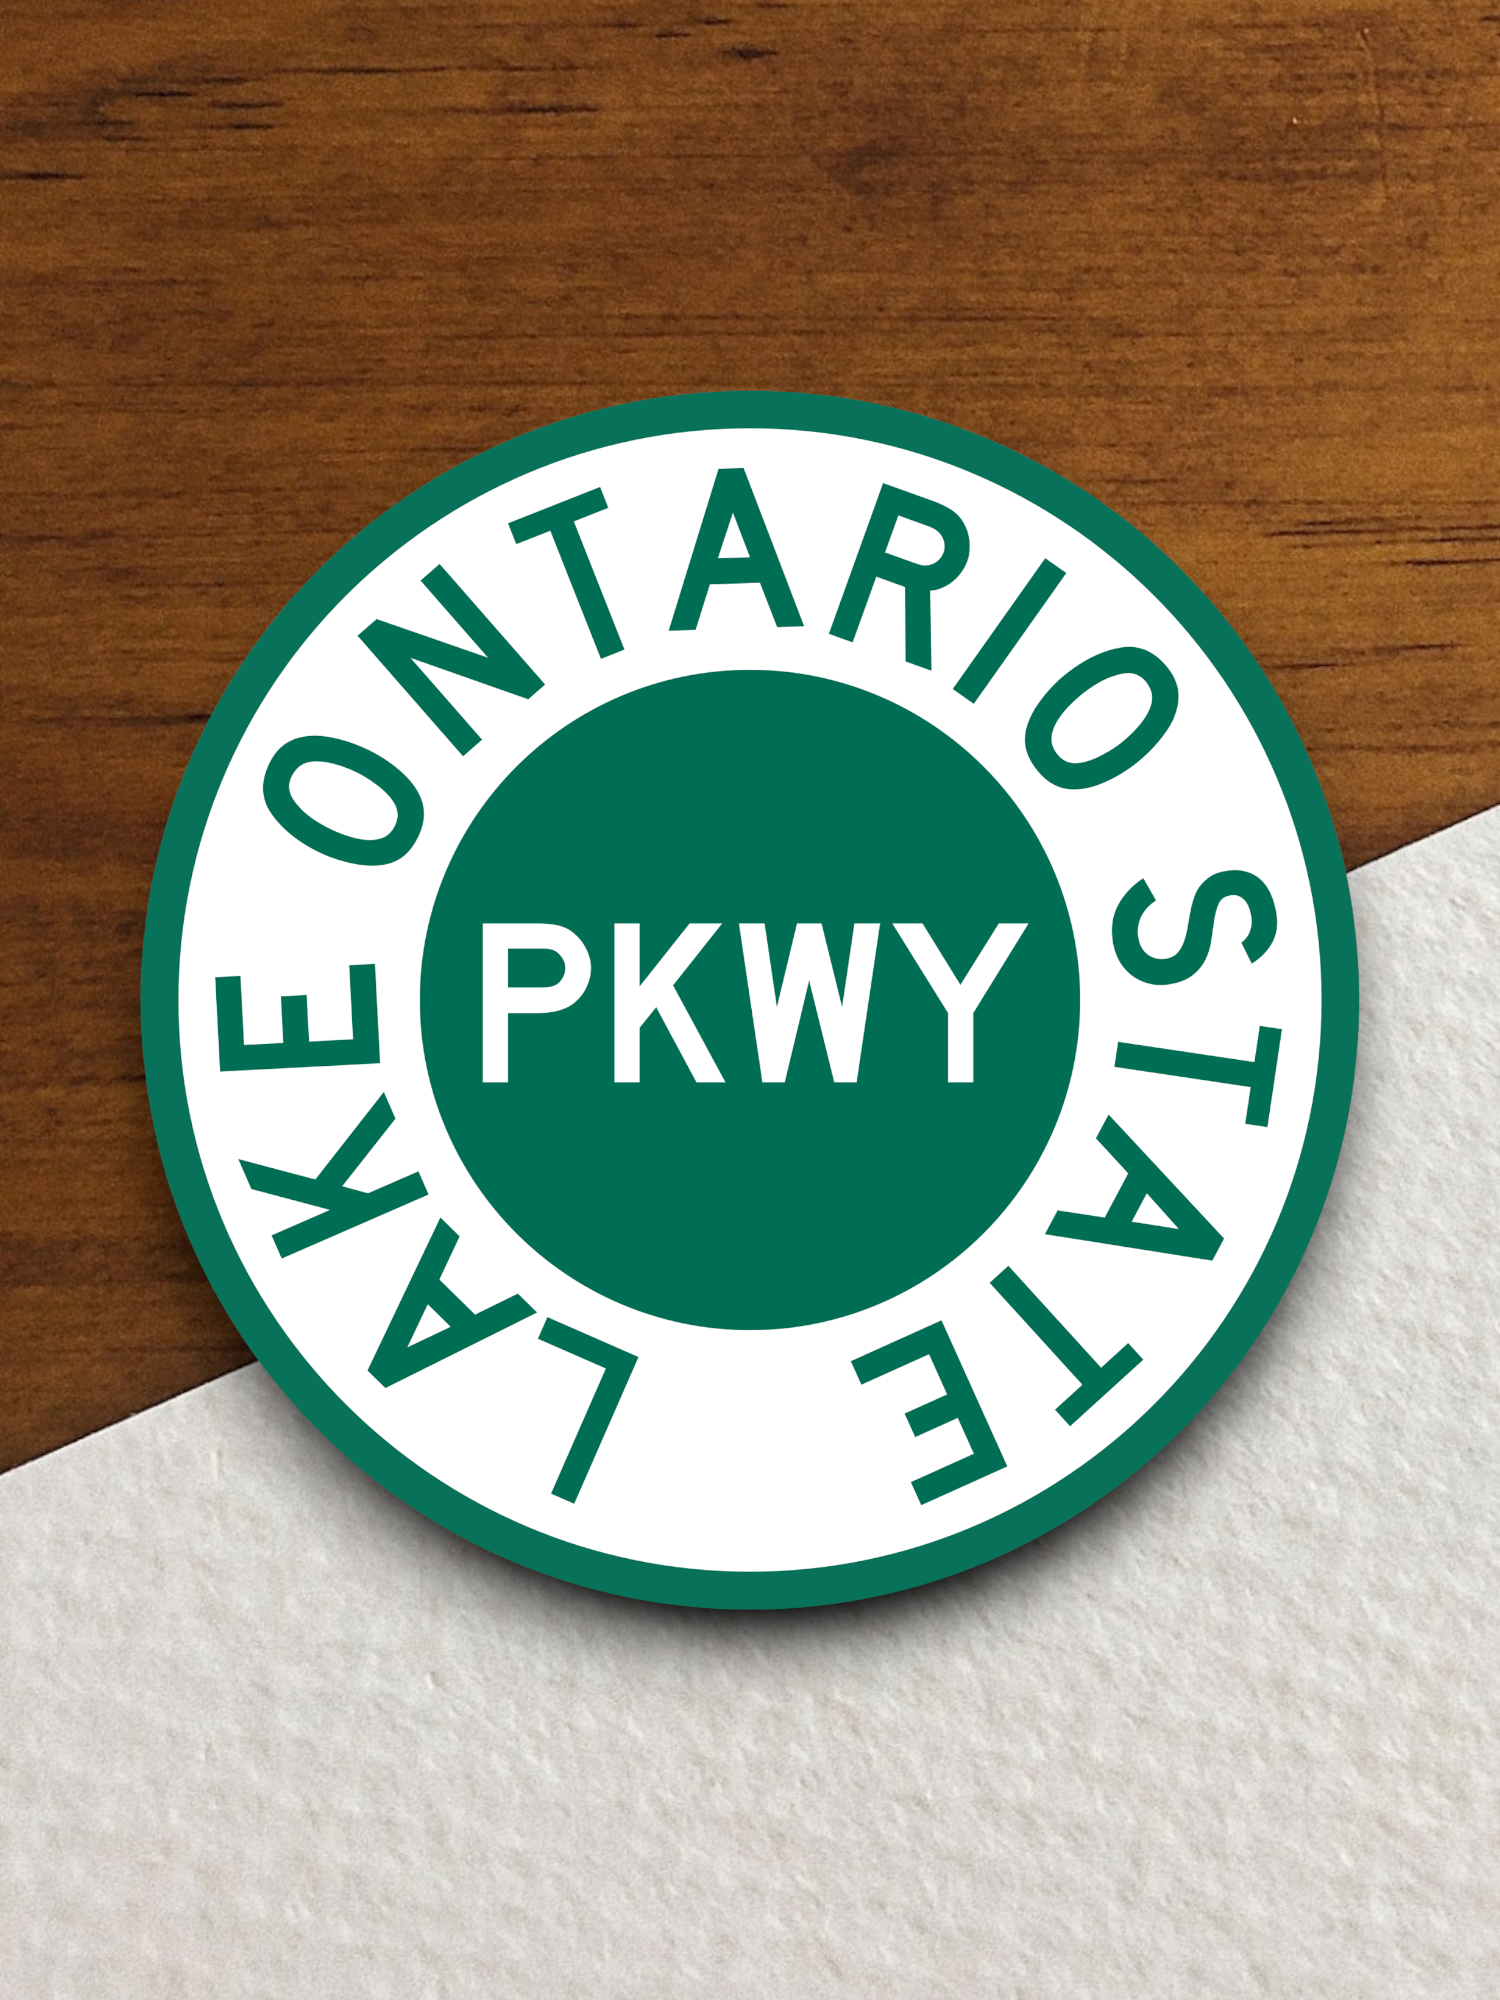 Lake Ontario State Parkway Shield Sticker